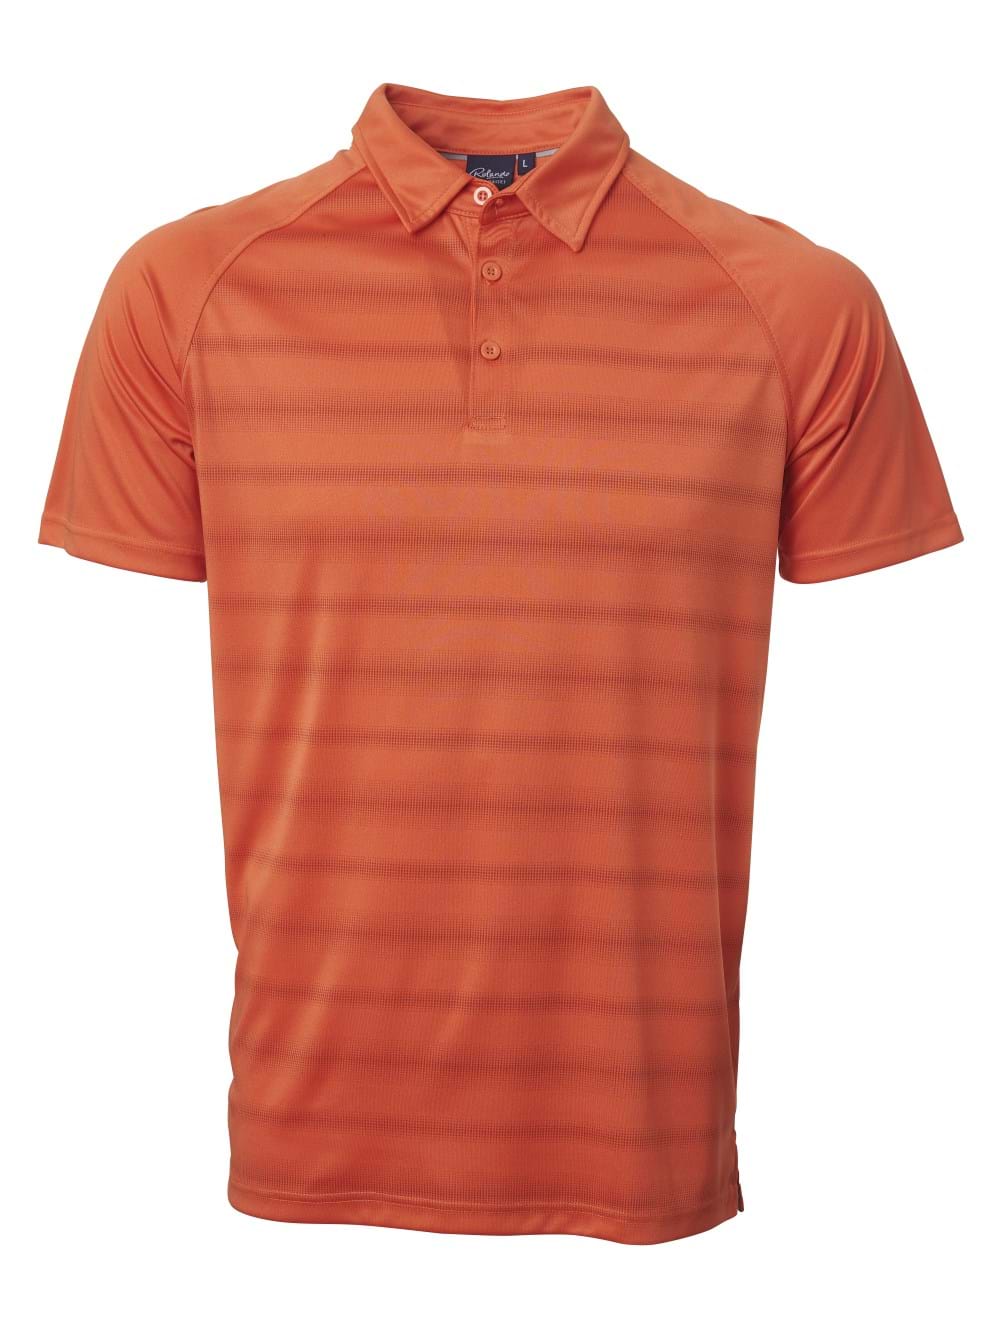 Pivot Golfer - Orange / XL